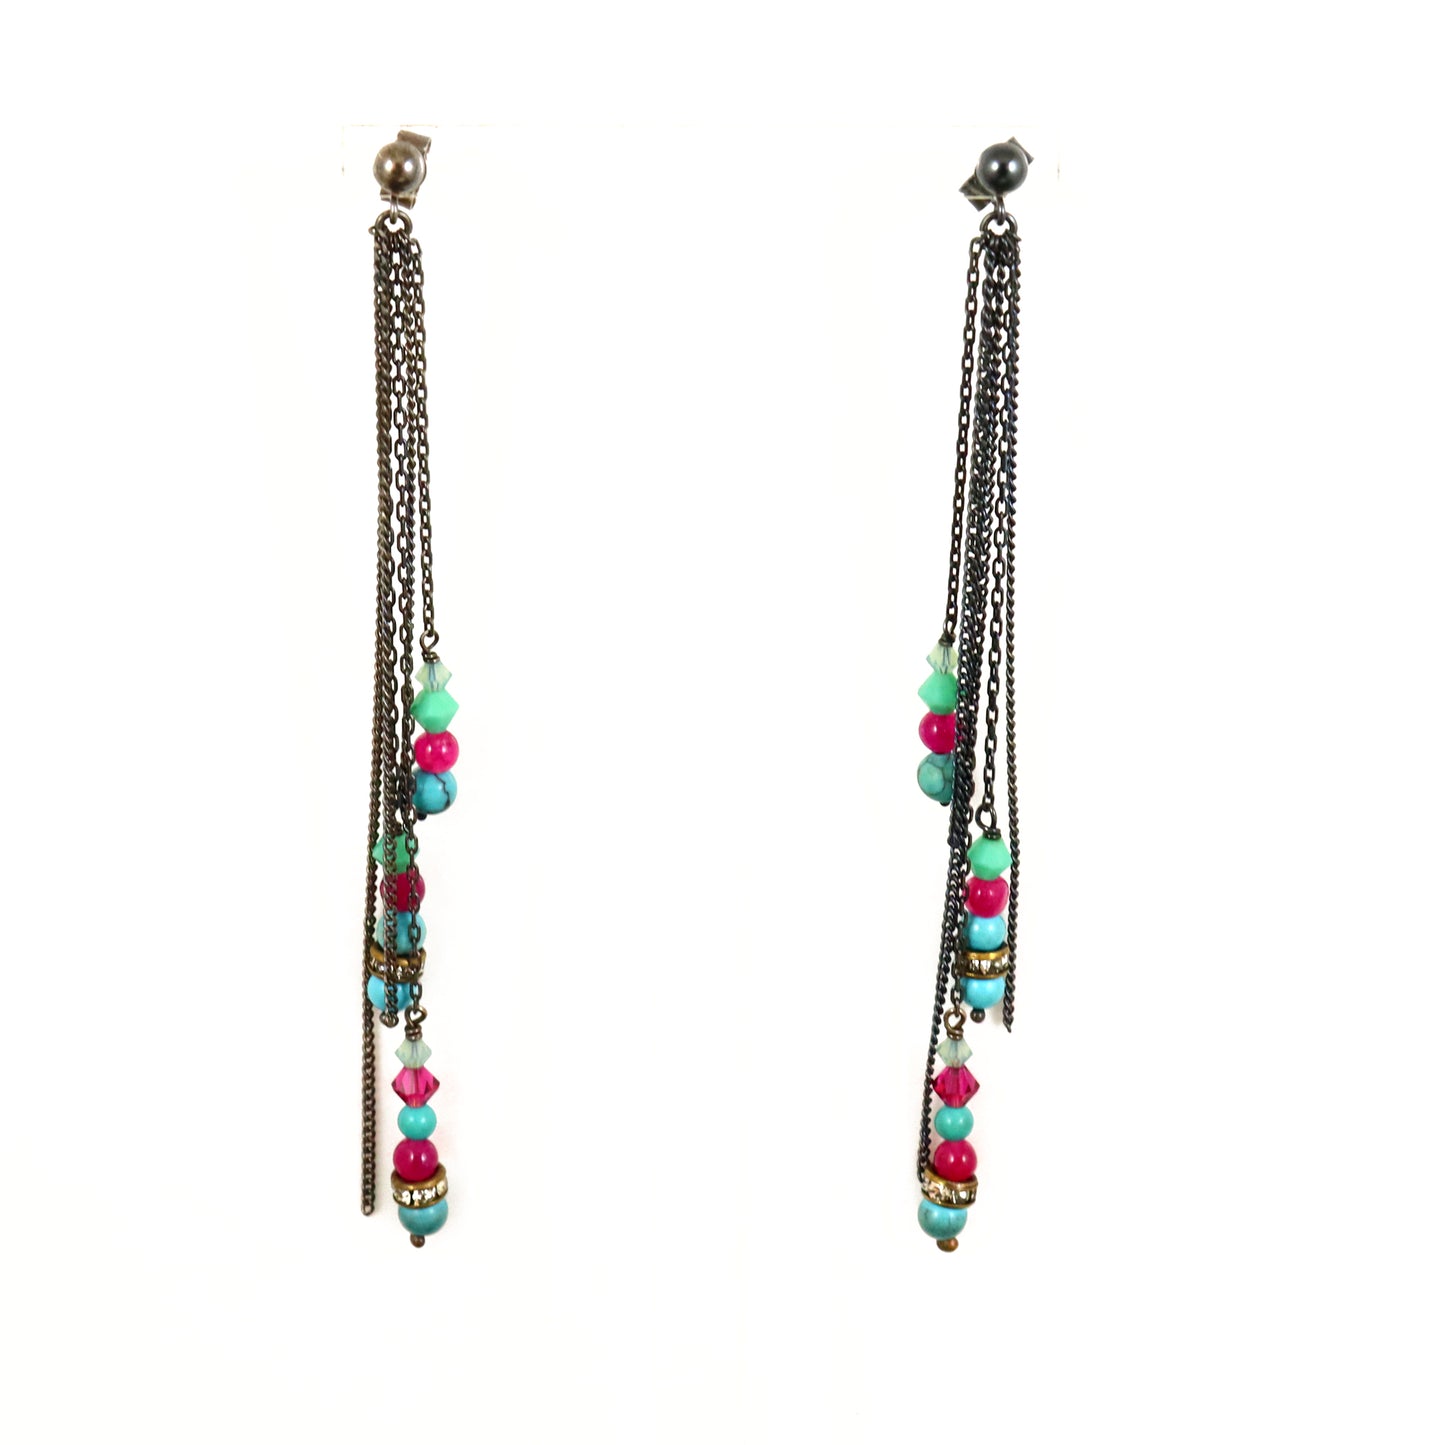 SALE - Vibrant gemstone earrings